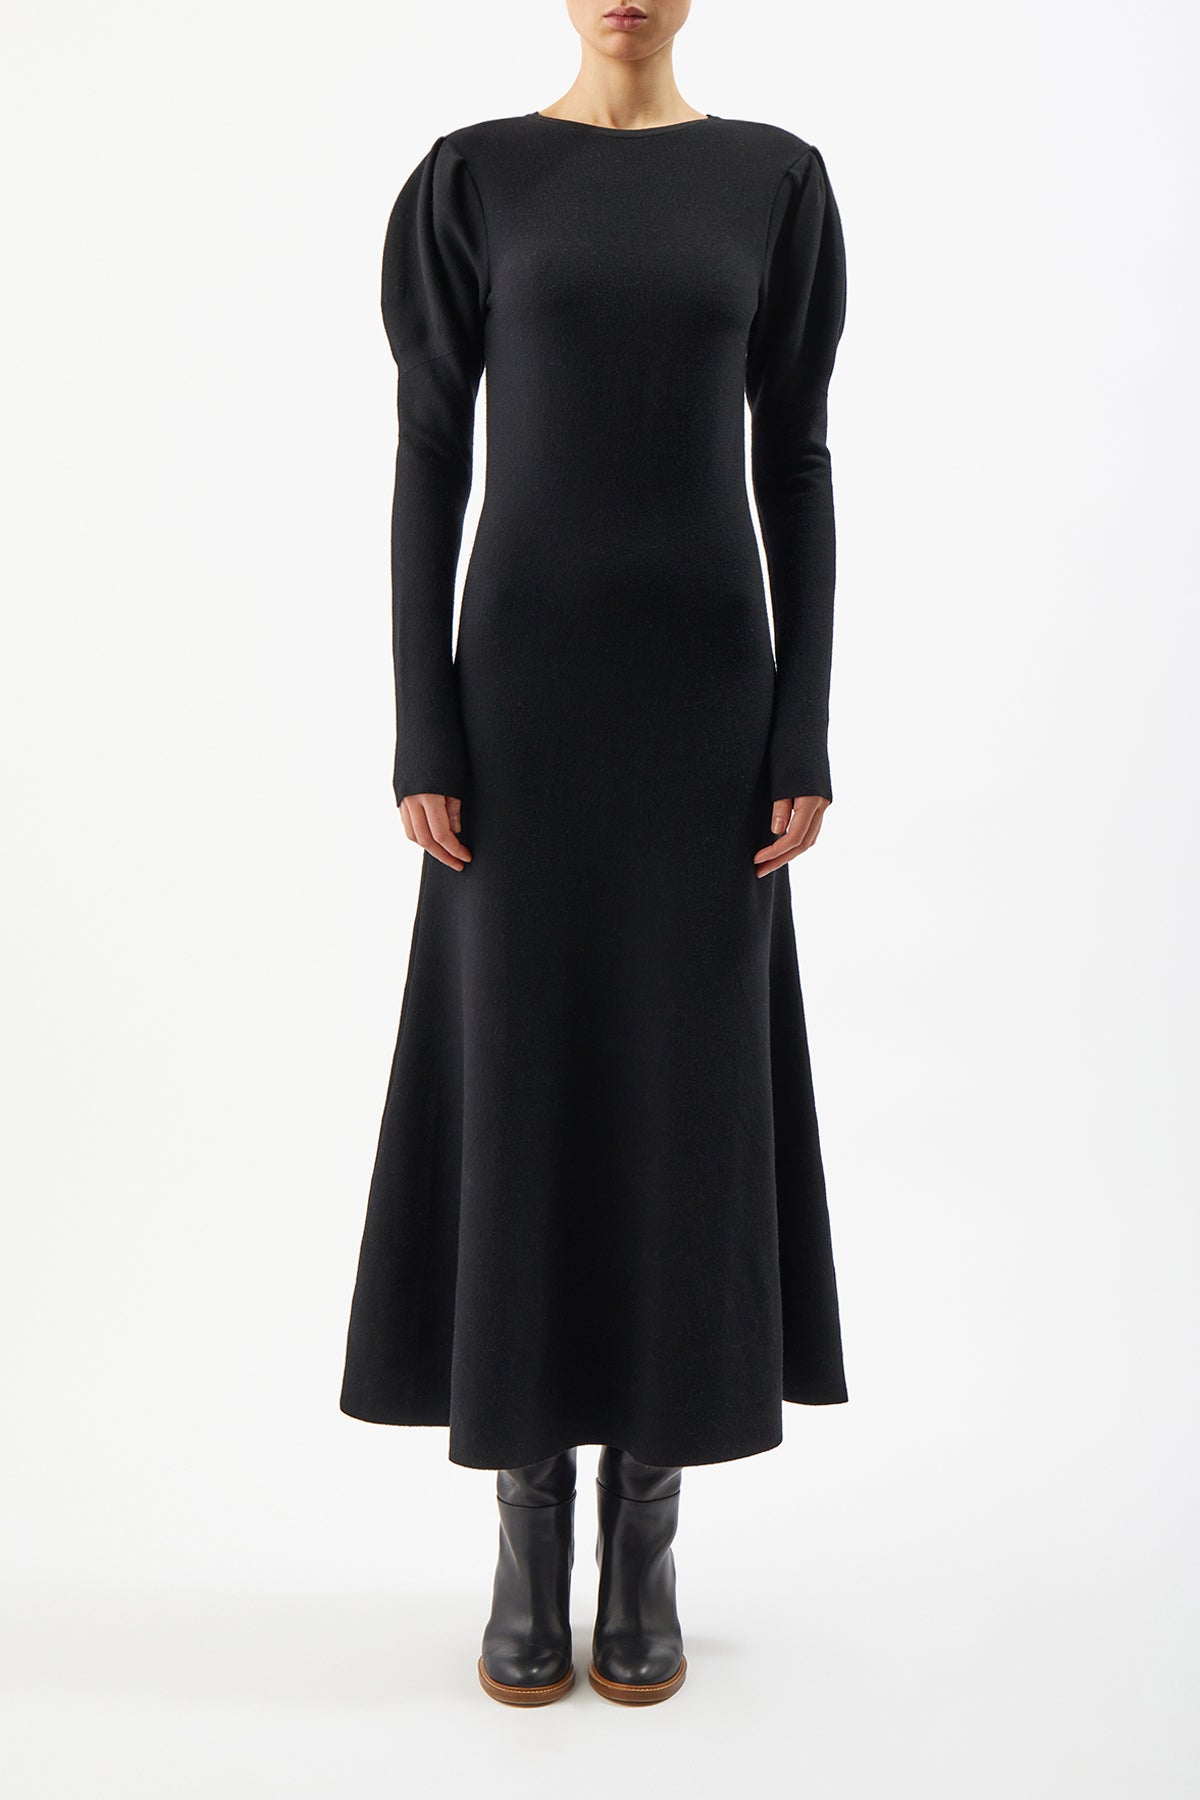 Hannah Knit Dress in Black Merino Wool Cashmere